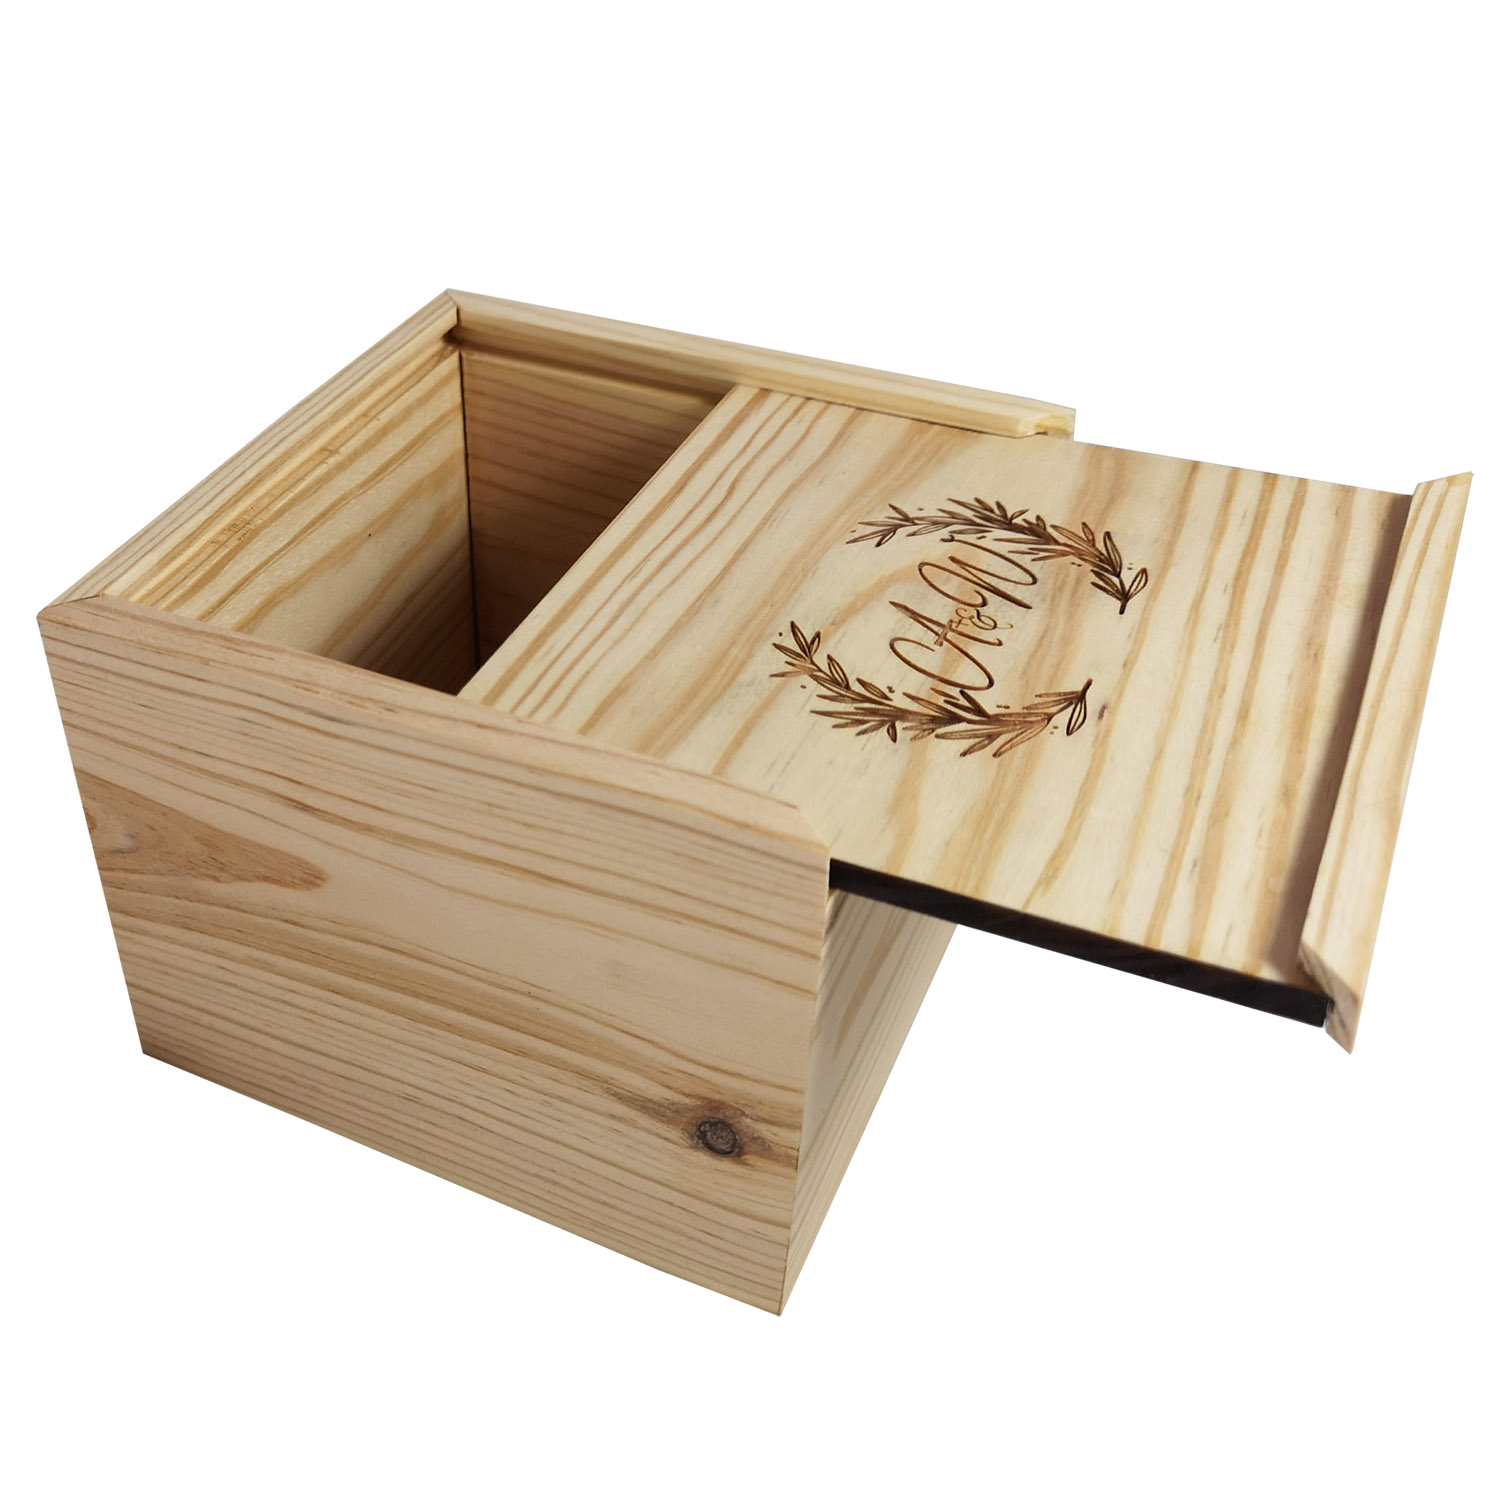 opened wooden sliding box